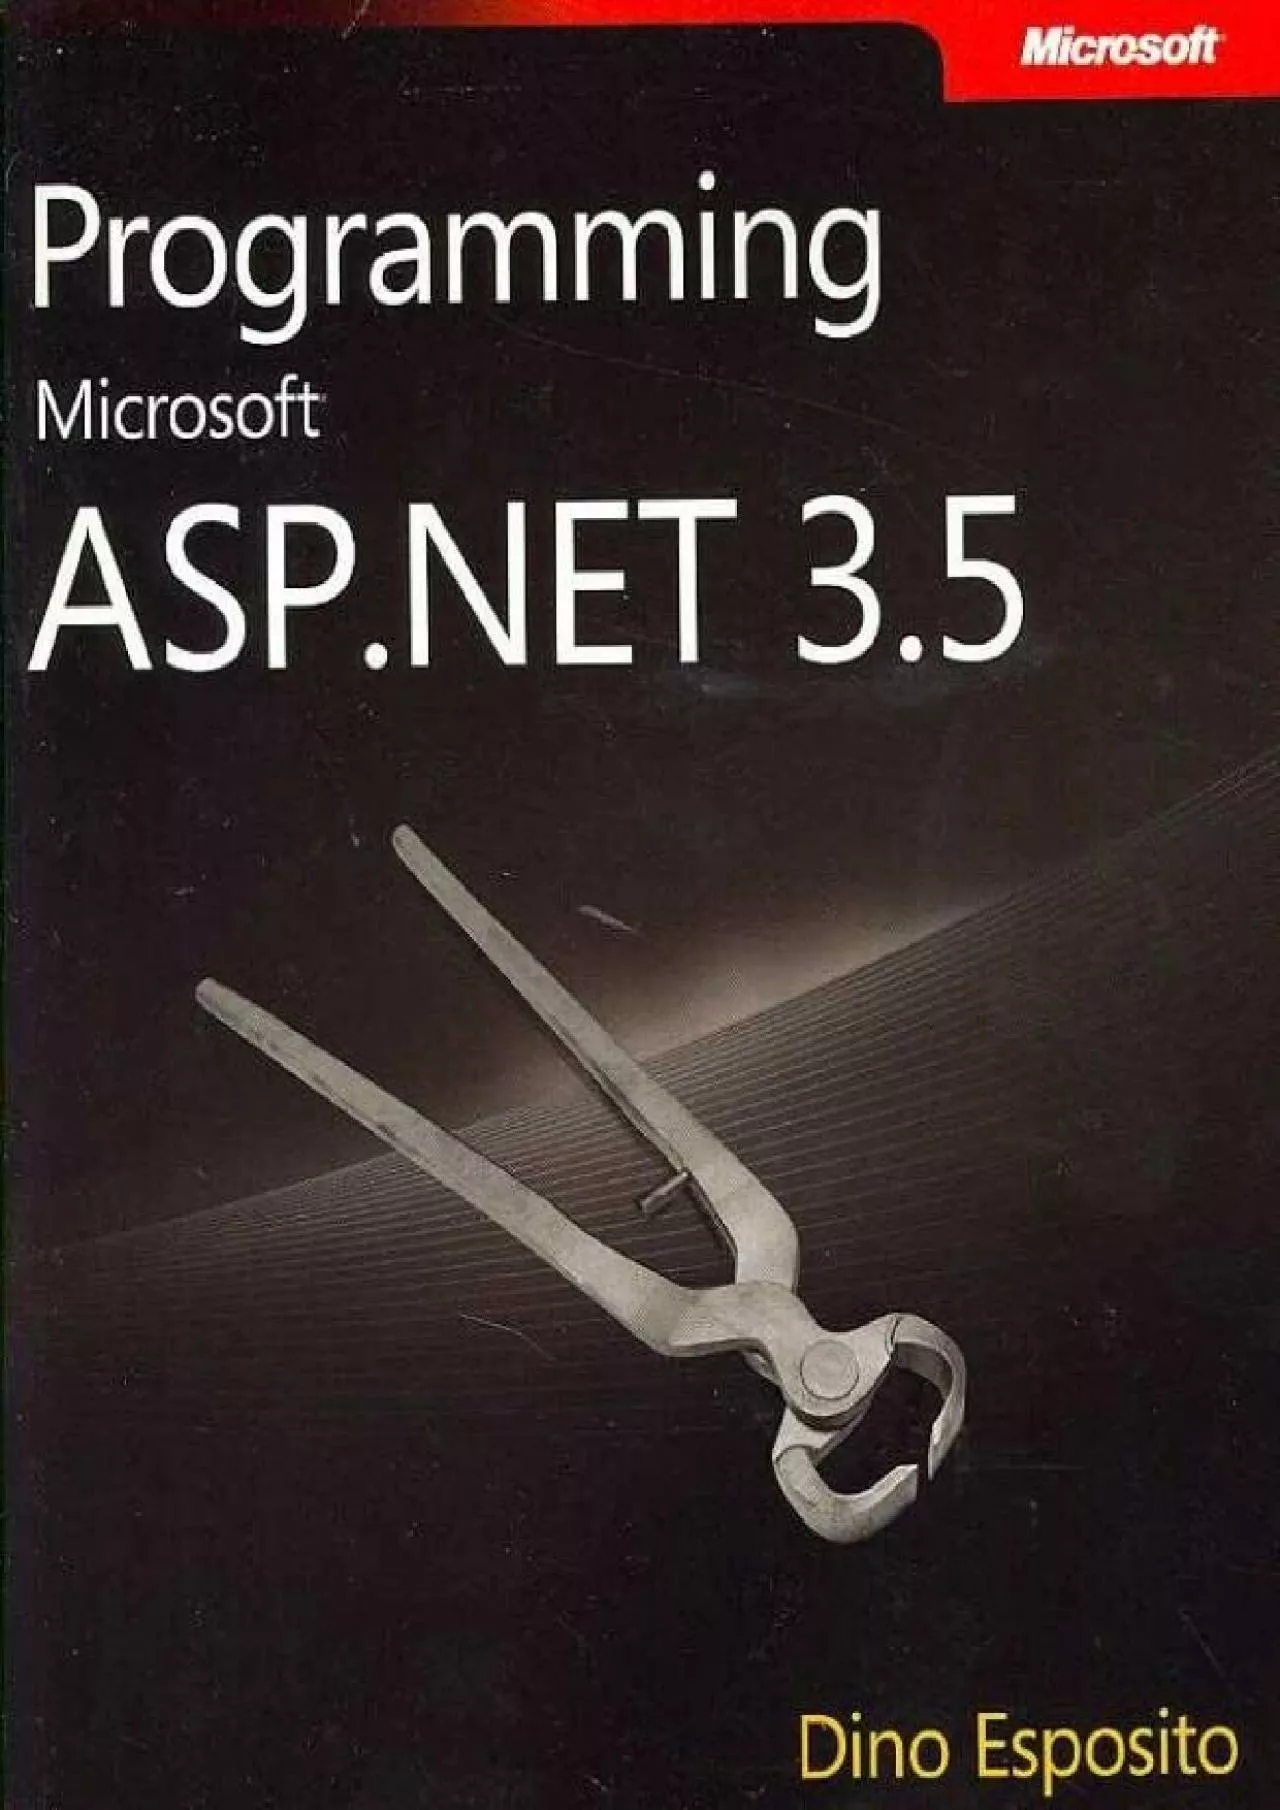 [FREE]-Programming Microsoft ASP.NET 3.5